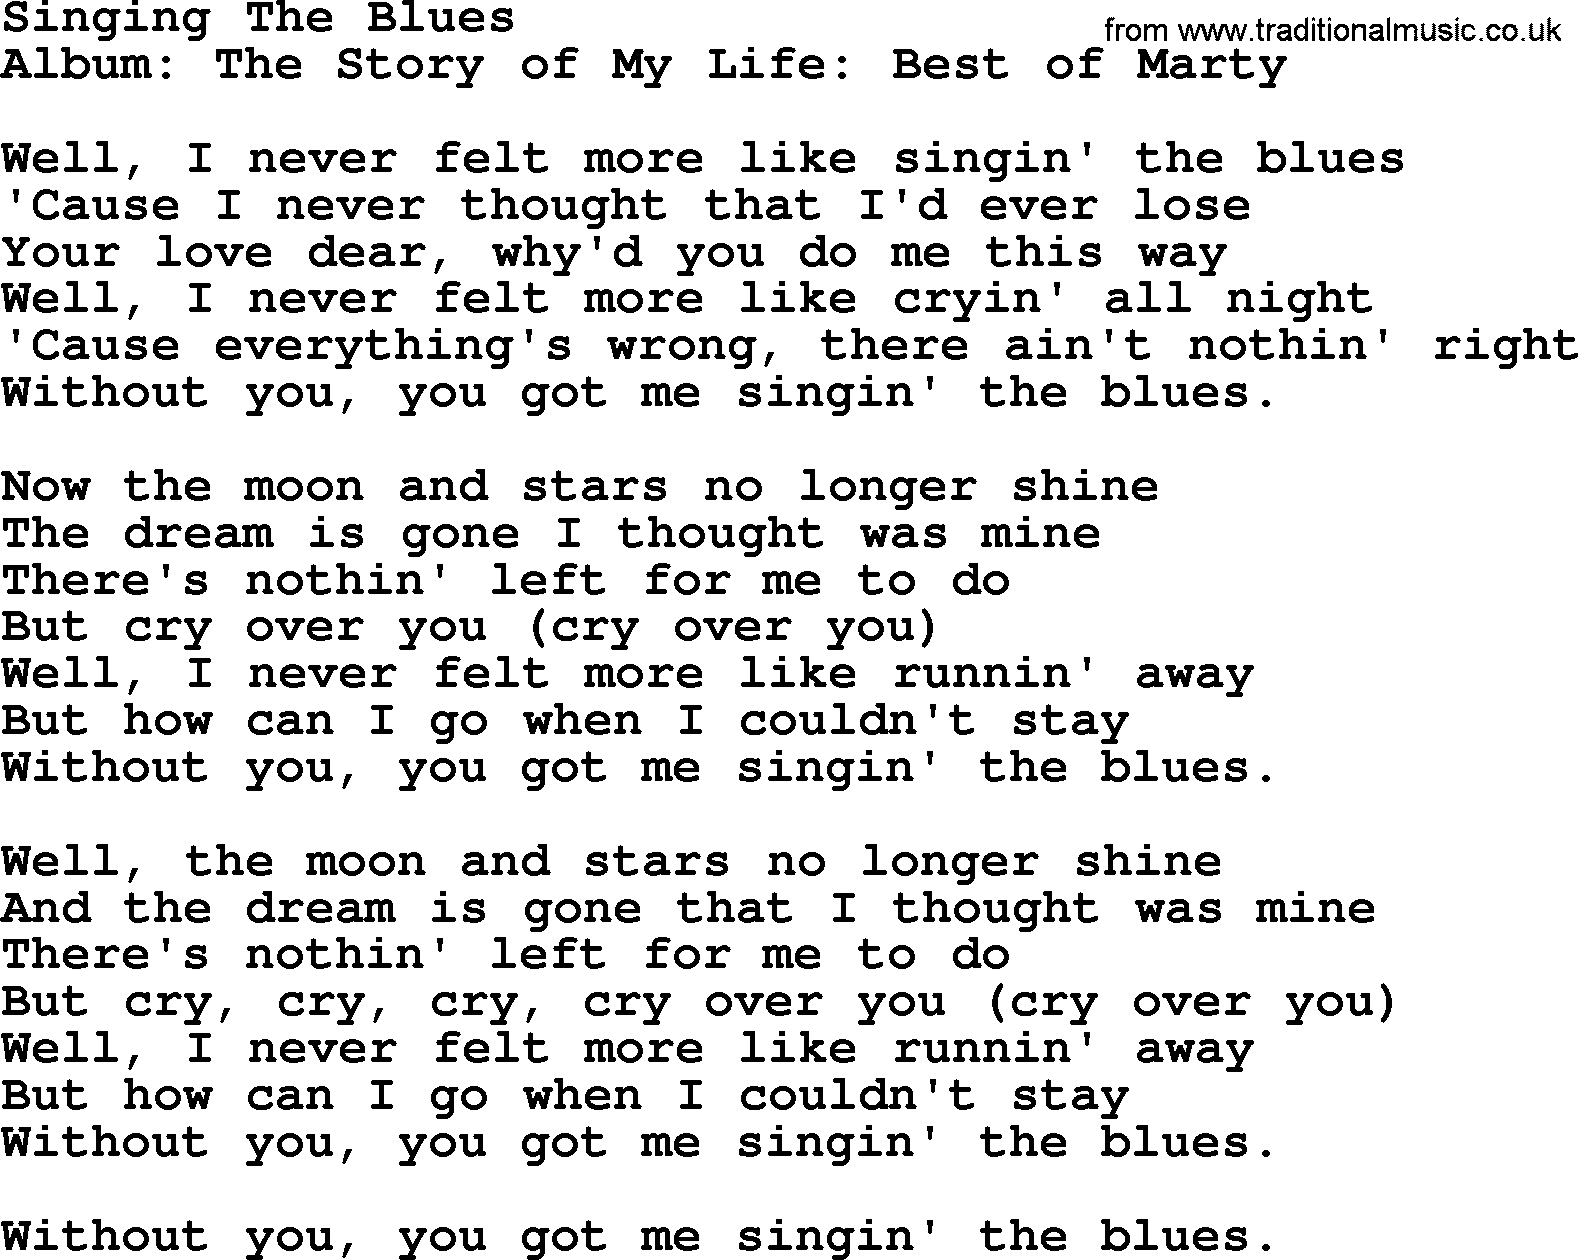 Marty Robbins song: Singing The Blues, lyrics